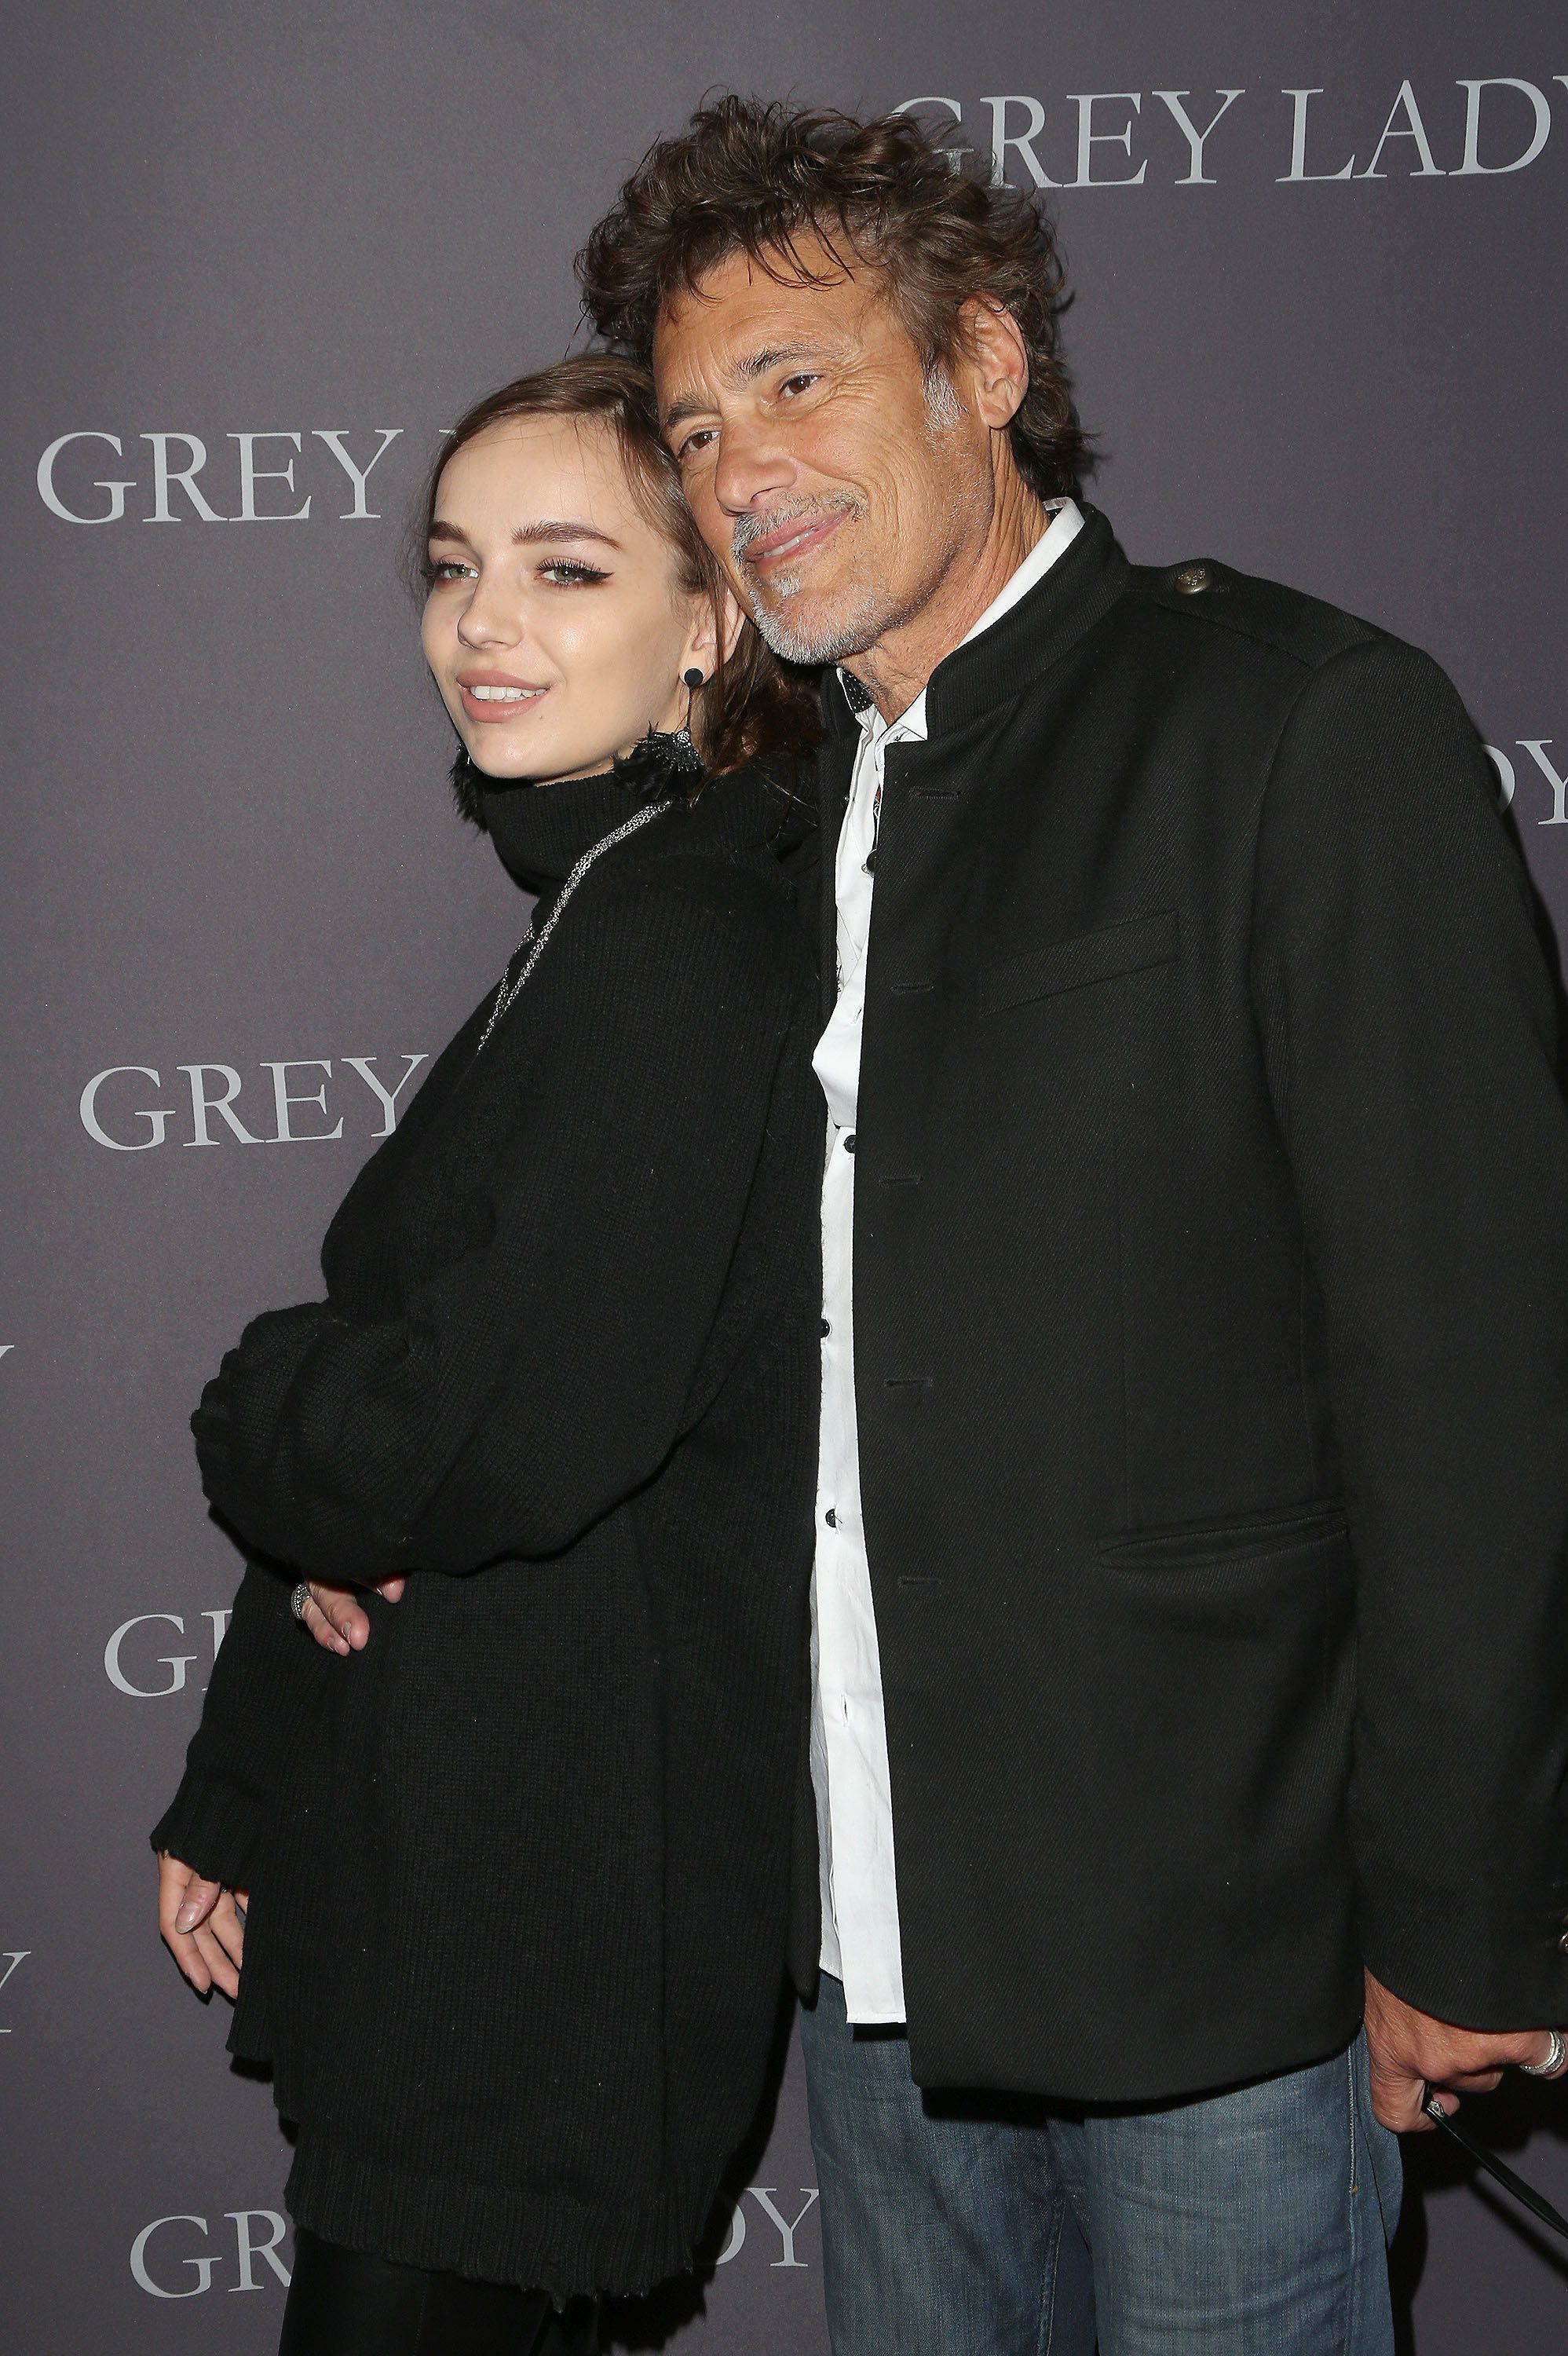 Lyda Loudon attends ‘Grey Lady’ film premiere